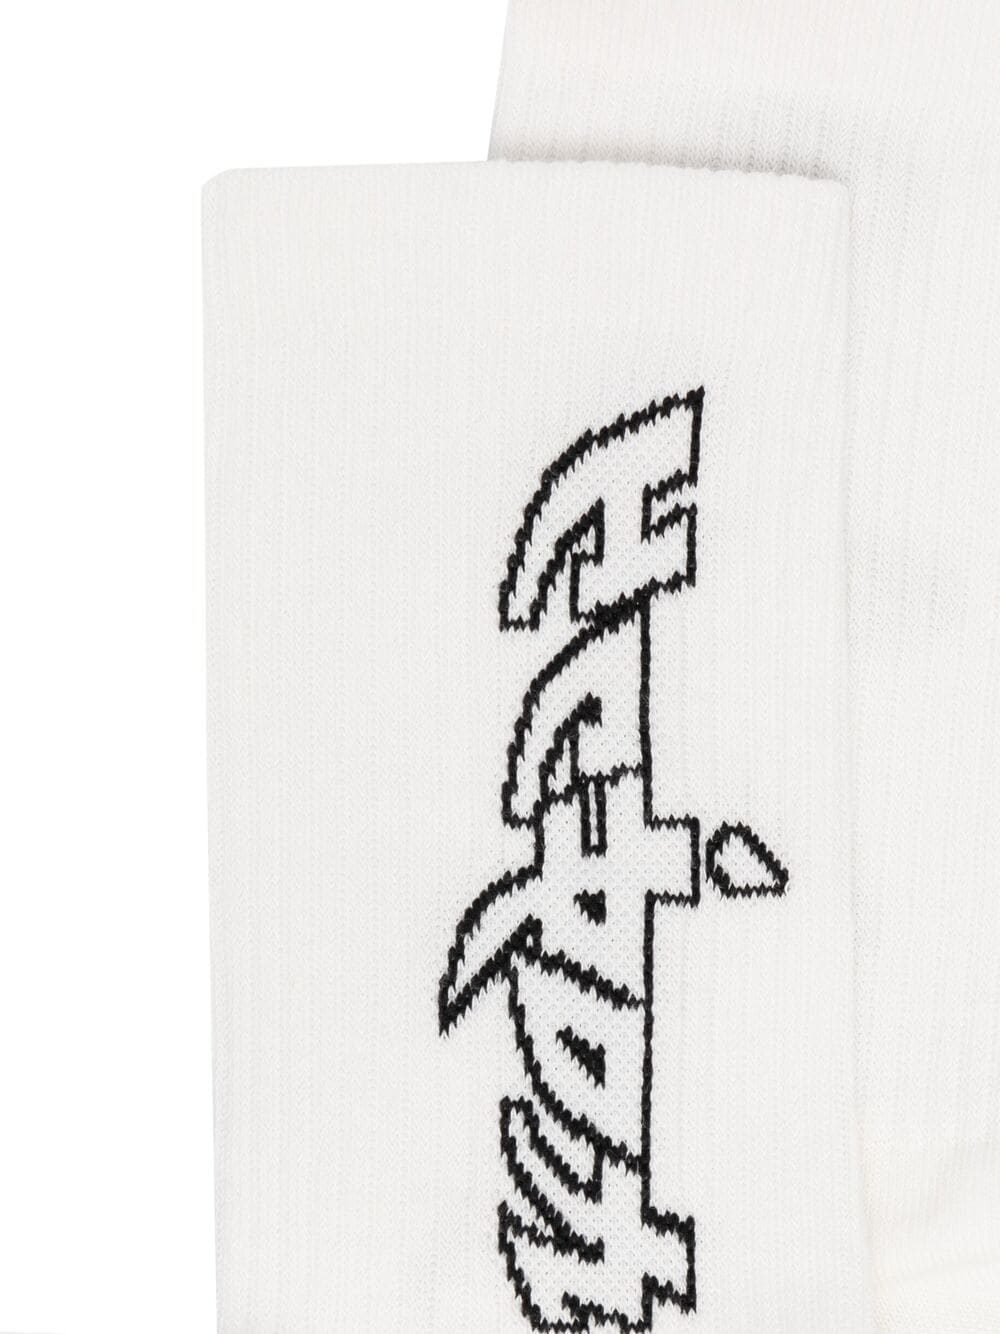 Arcade logo socks white